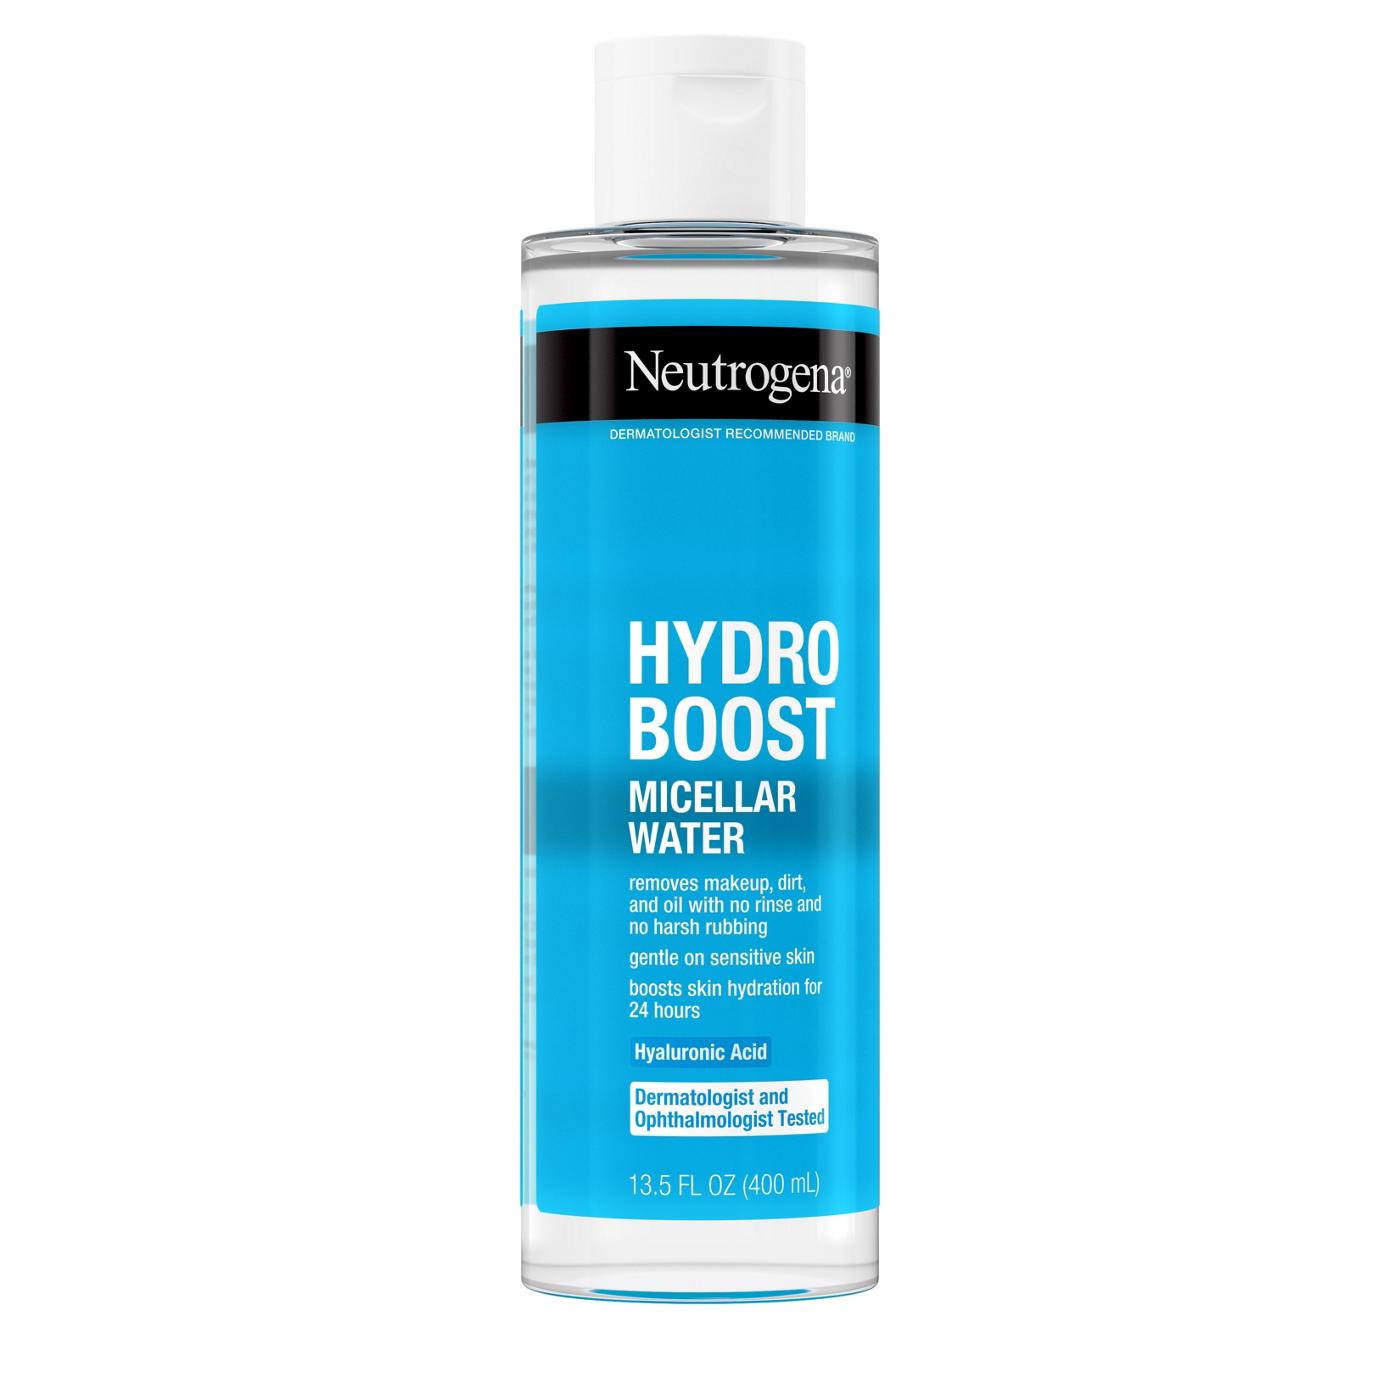 Neutrogena Hydro Boost Micellar Water; image 1 of 2